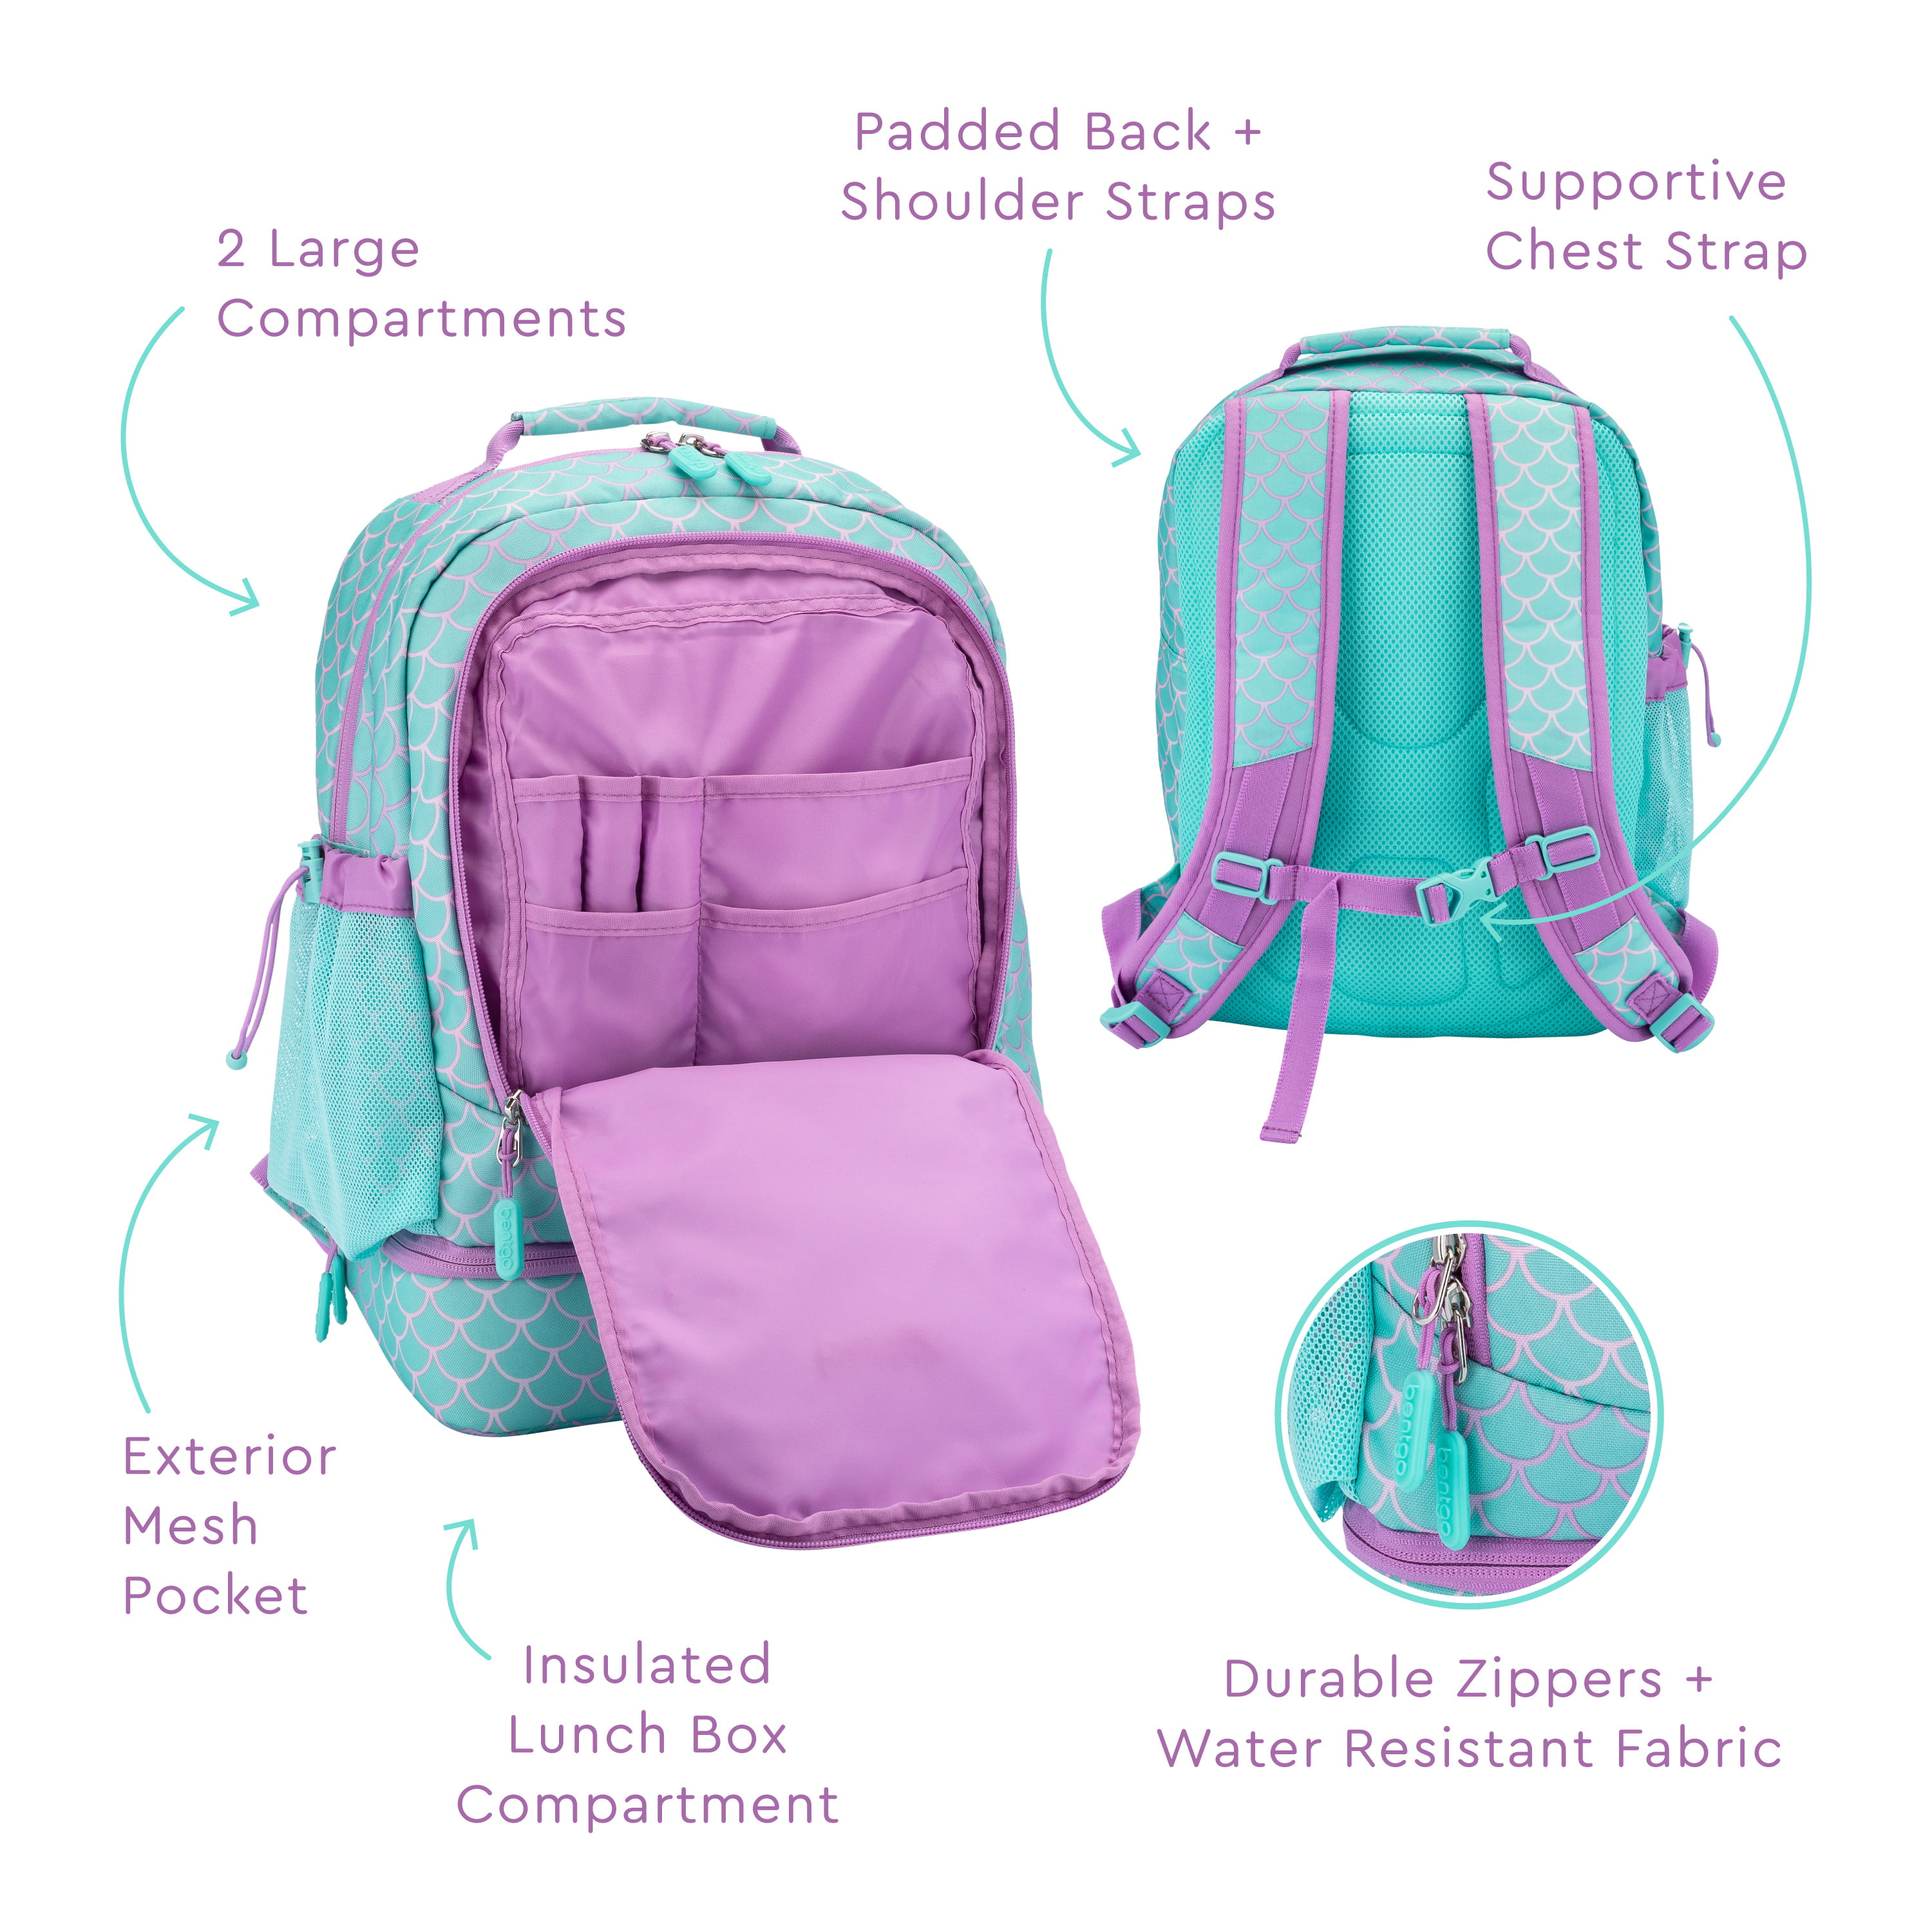 Bentgo® Kids Prints 2-in-1 Backpack & Insulated Lunch Bag - Blue Rocket 